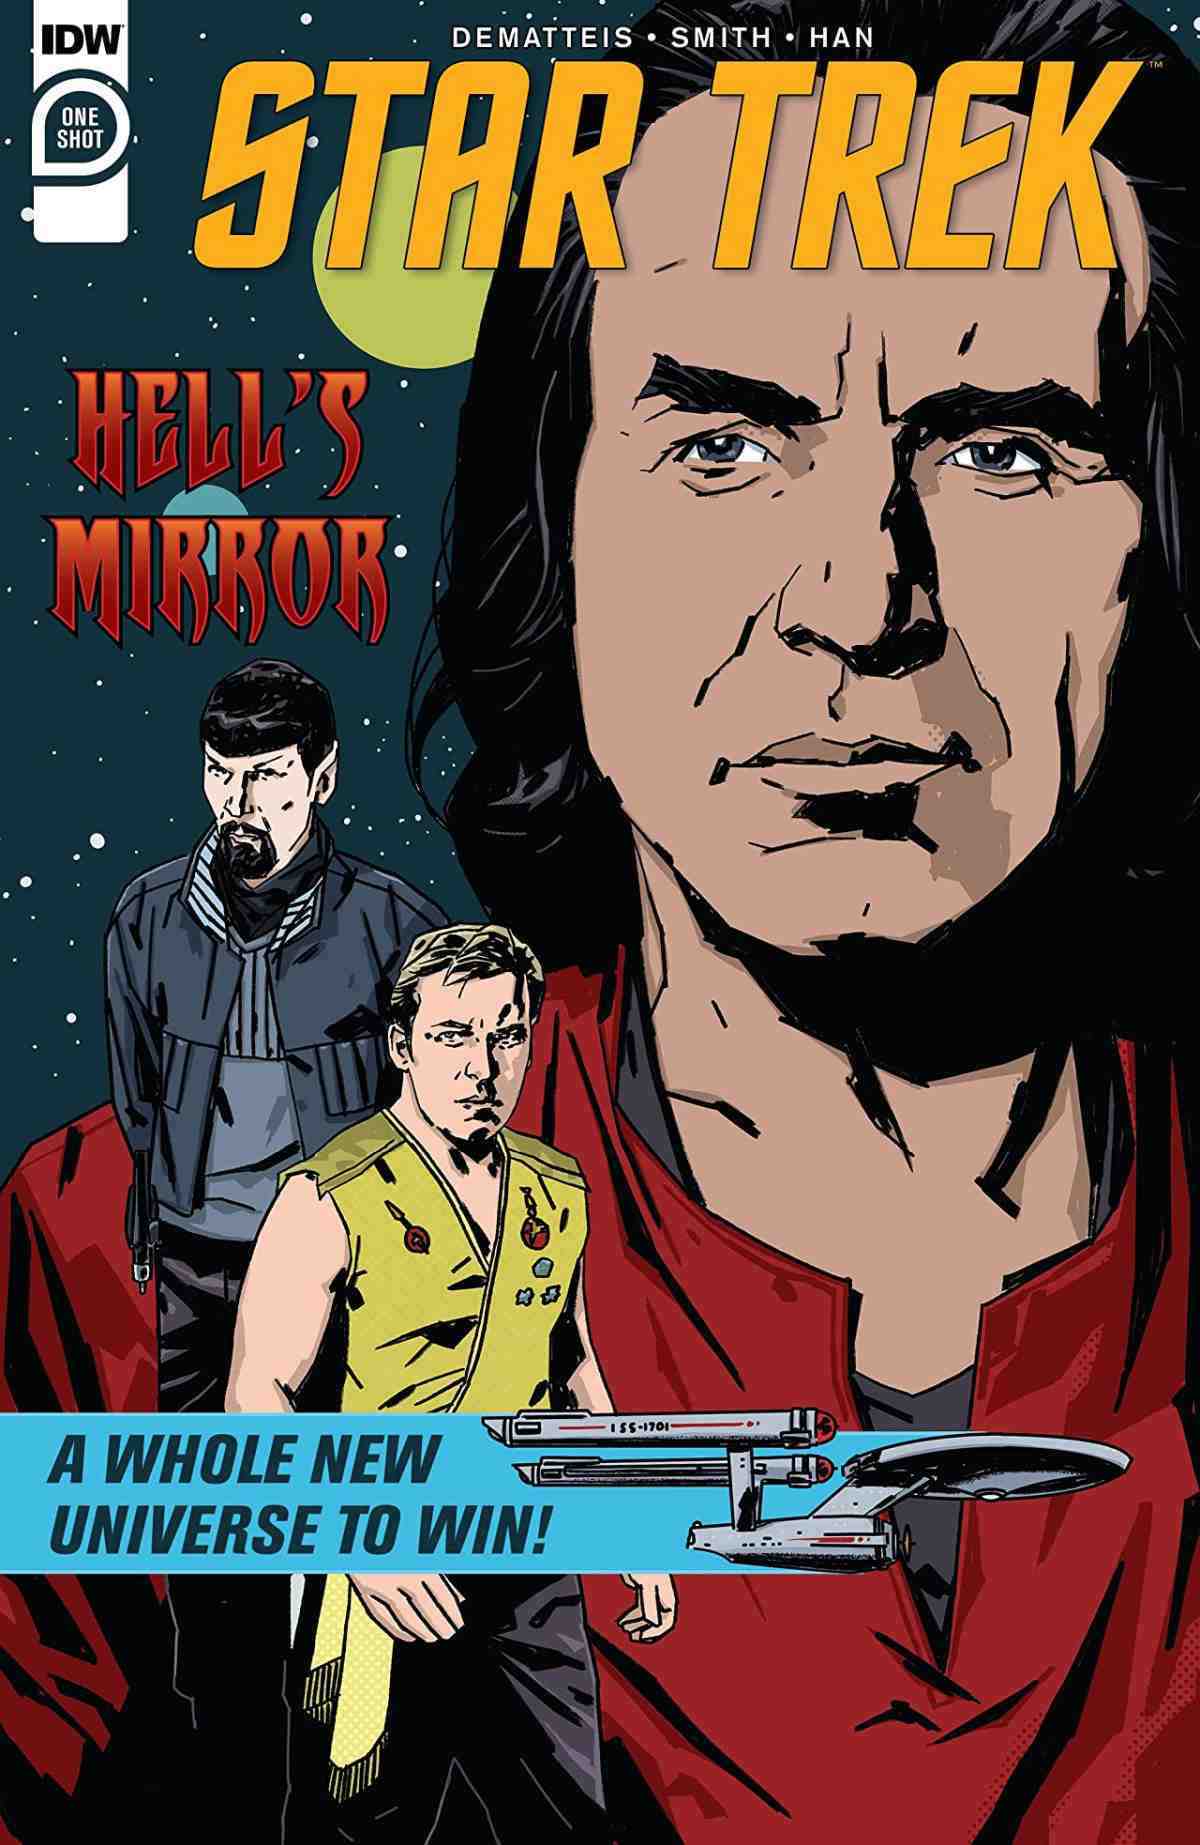 Espejo del infierno de Star Trek